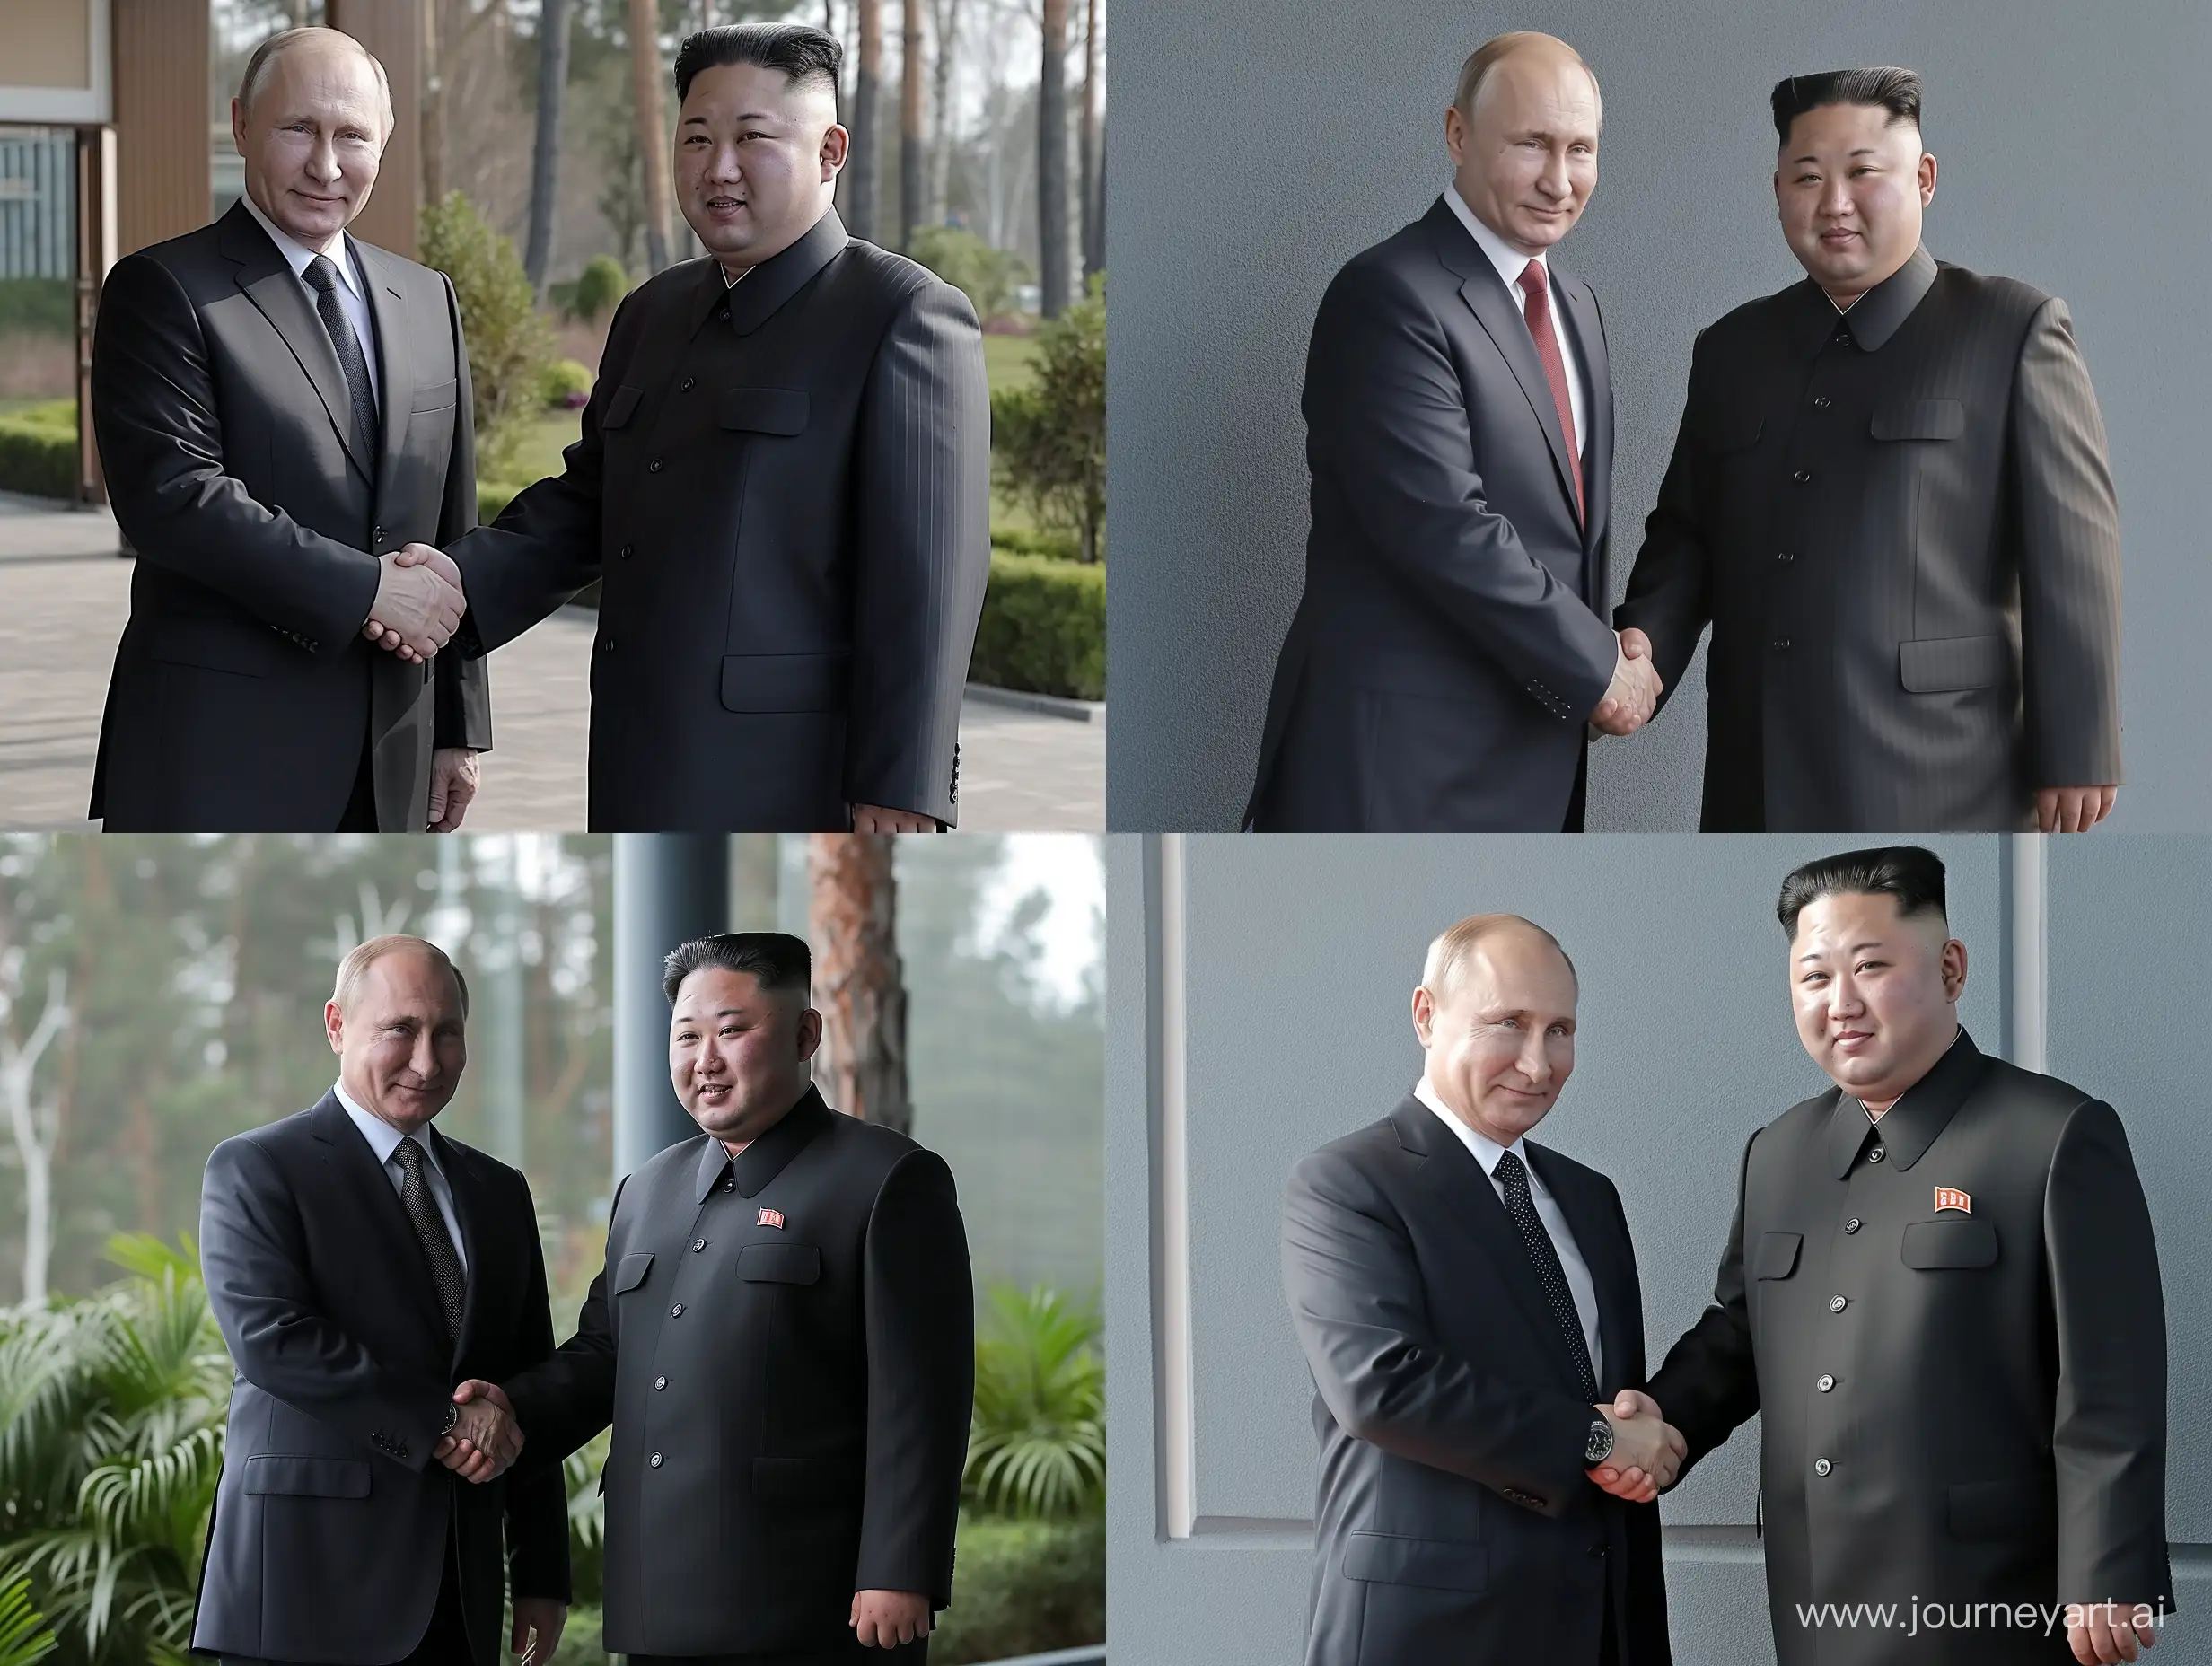 Putin-and-Kim-Jong-Un-Shaking-Hands-Outdoors-in-Daylight